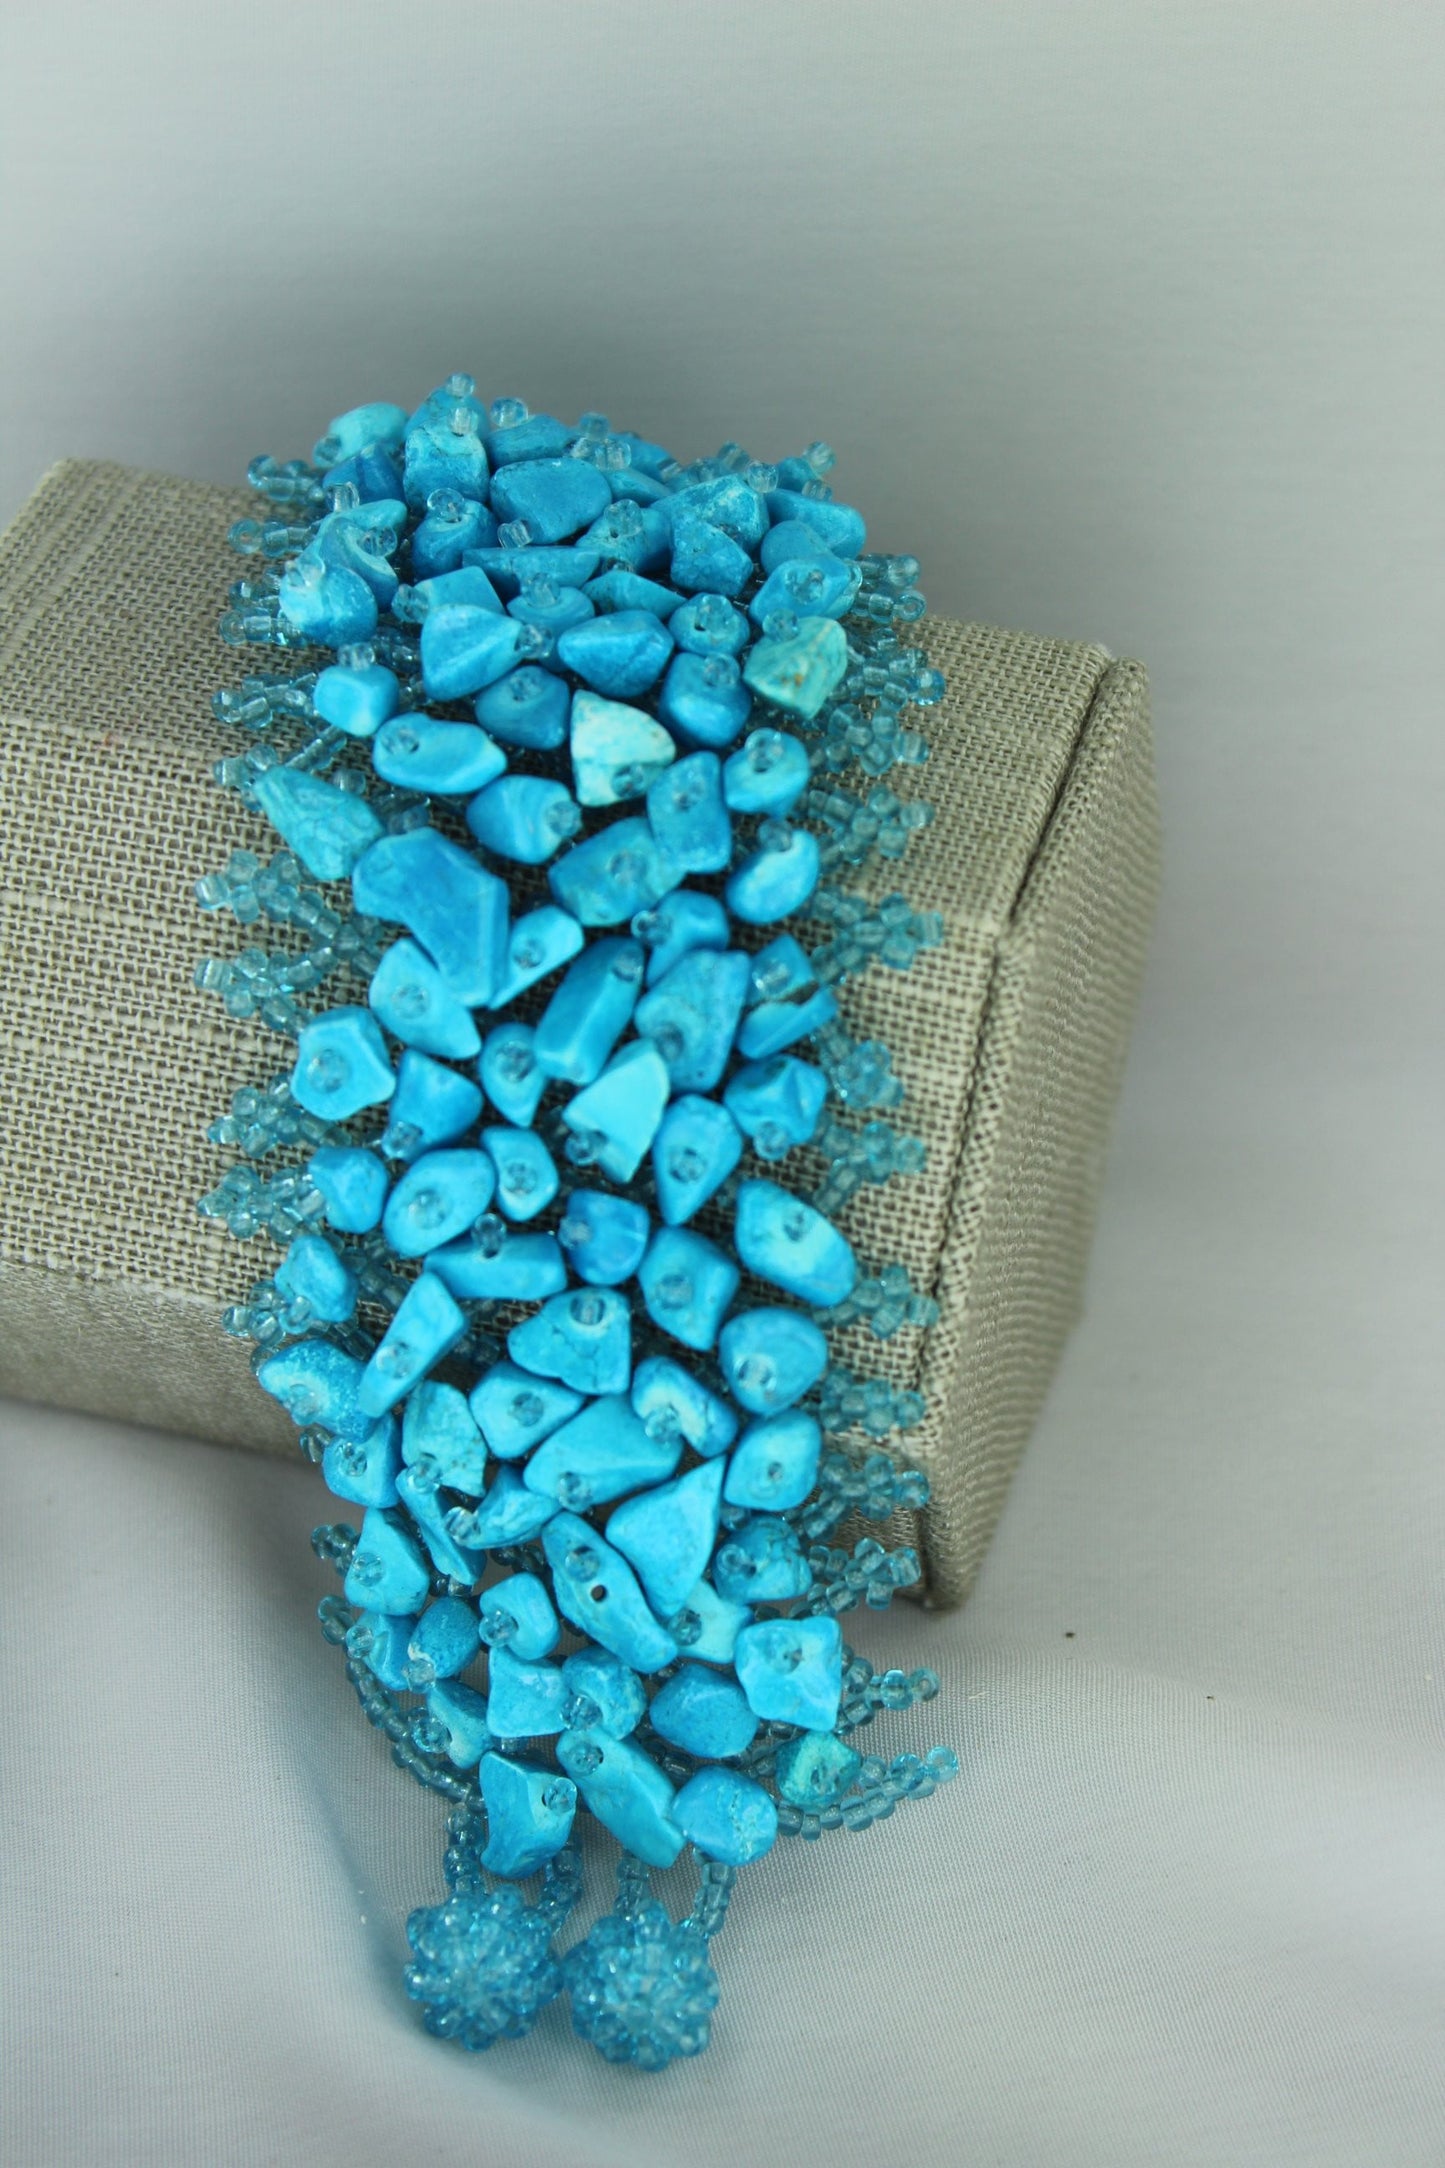 Turquoise Nugget Bracelet Seed Bead Woven Base Artisan artistic